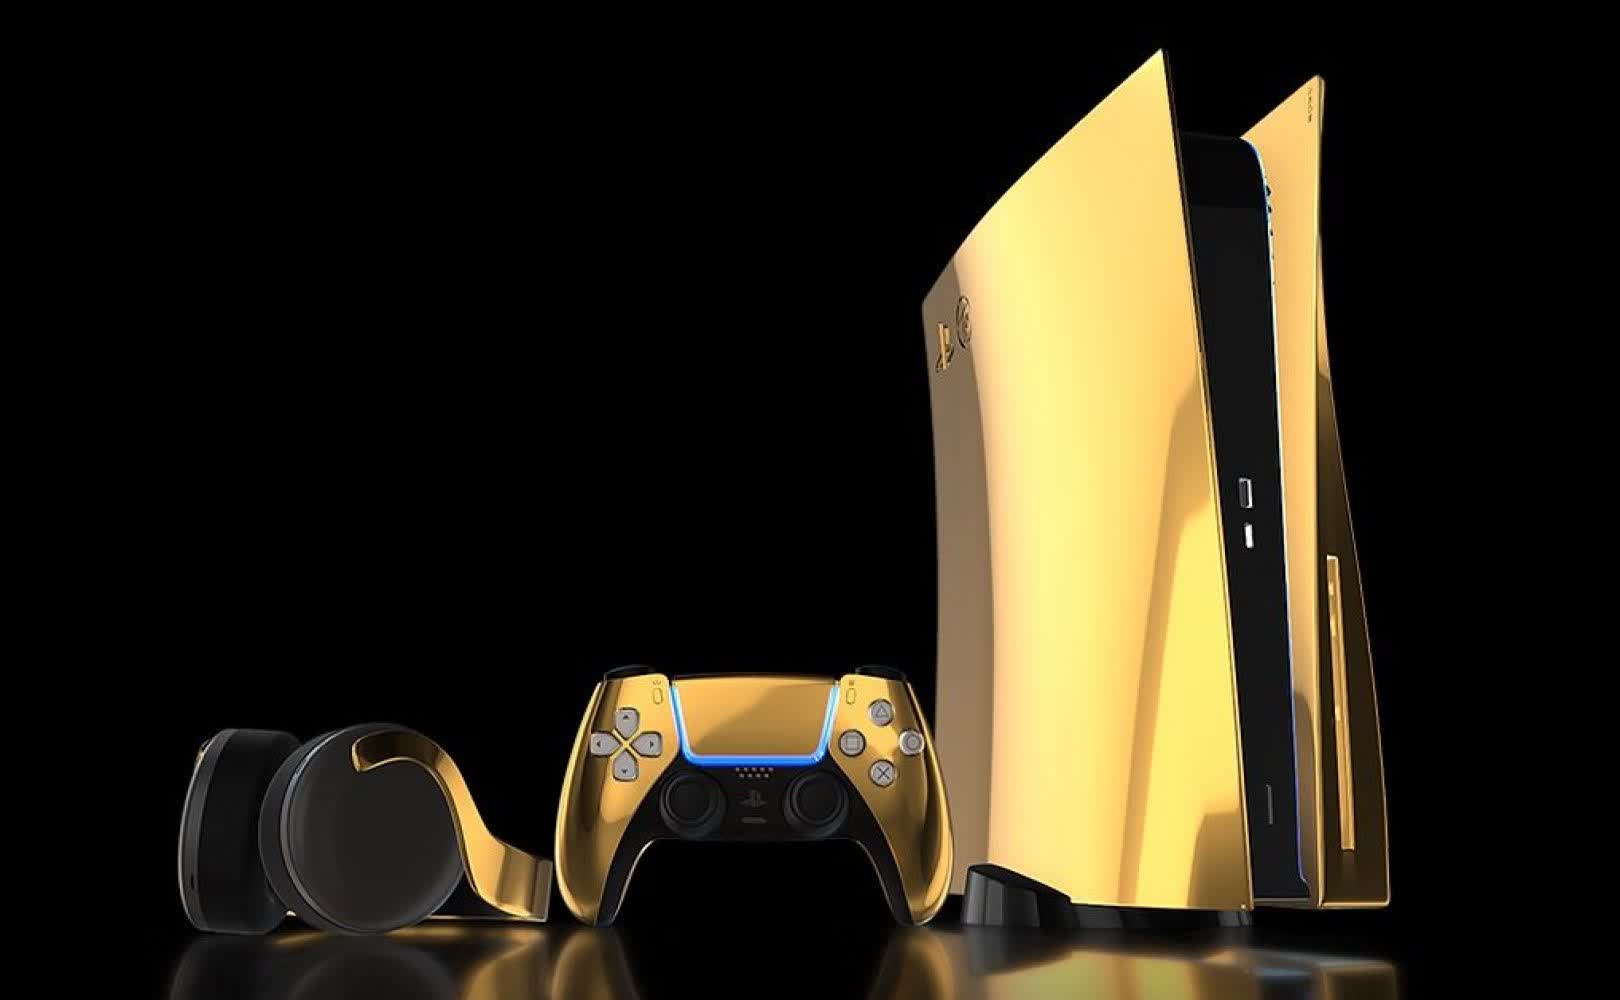 Paranafloden bh Disciplin This 24K gold PlayStation 5 will set you back $10,000 | TechSpot